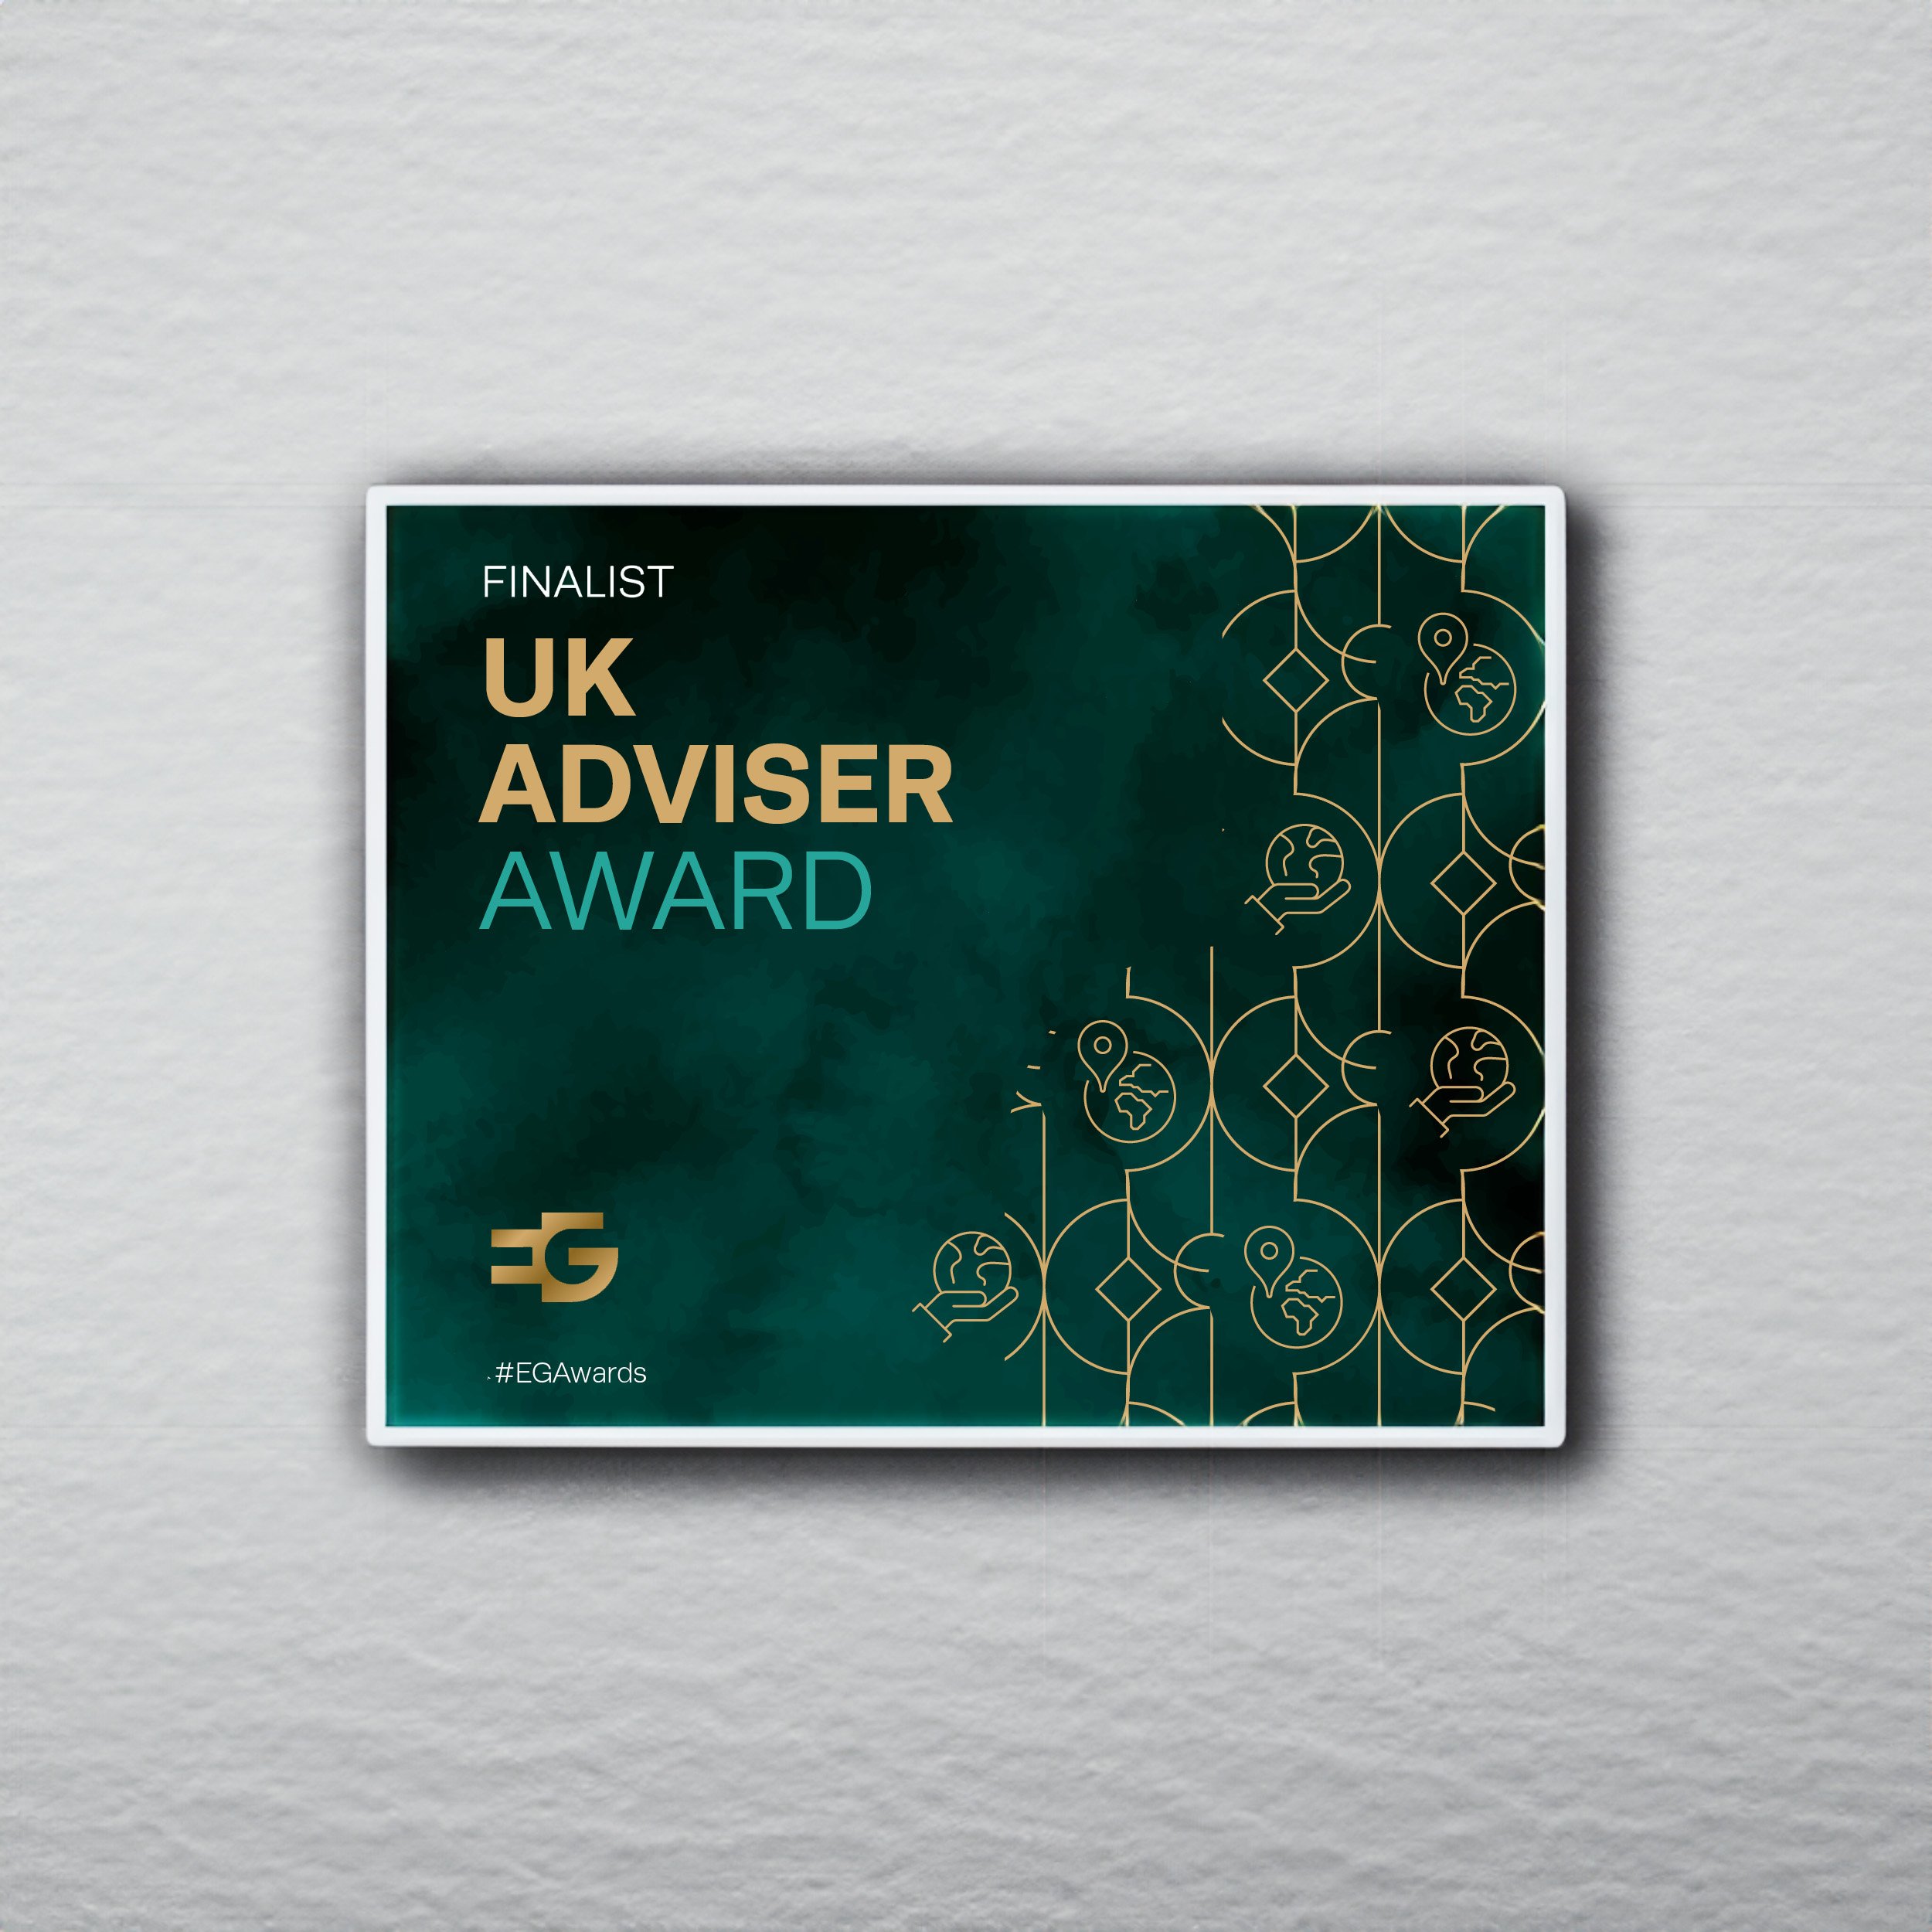 Bidwells shortlisted in coveted EG UK Adviser Award